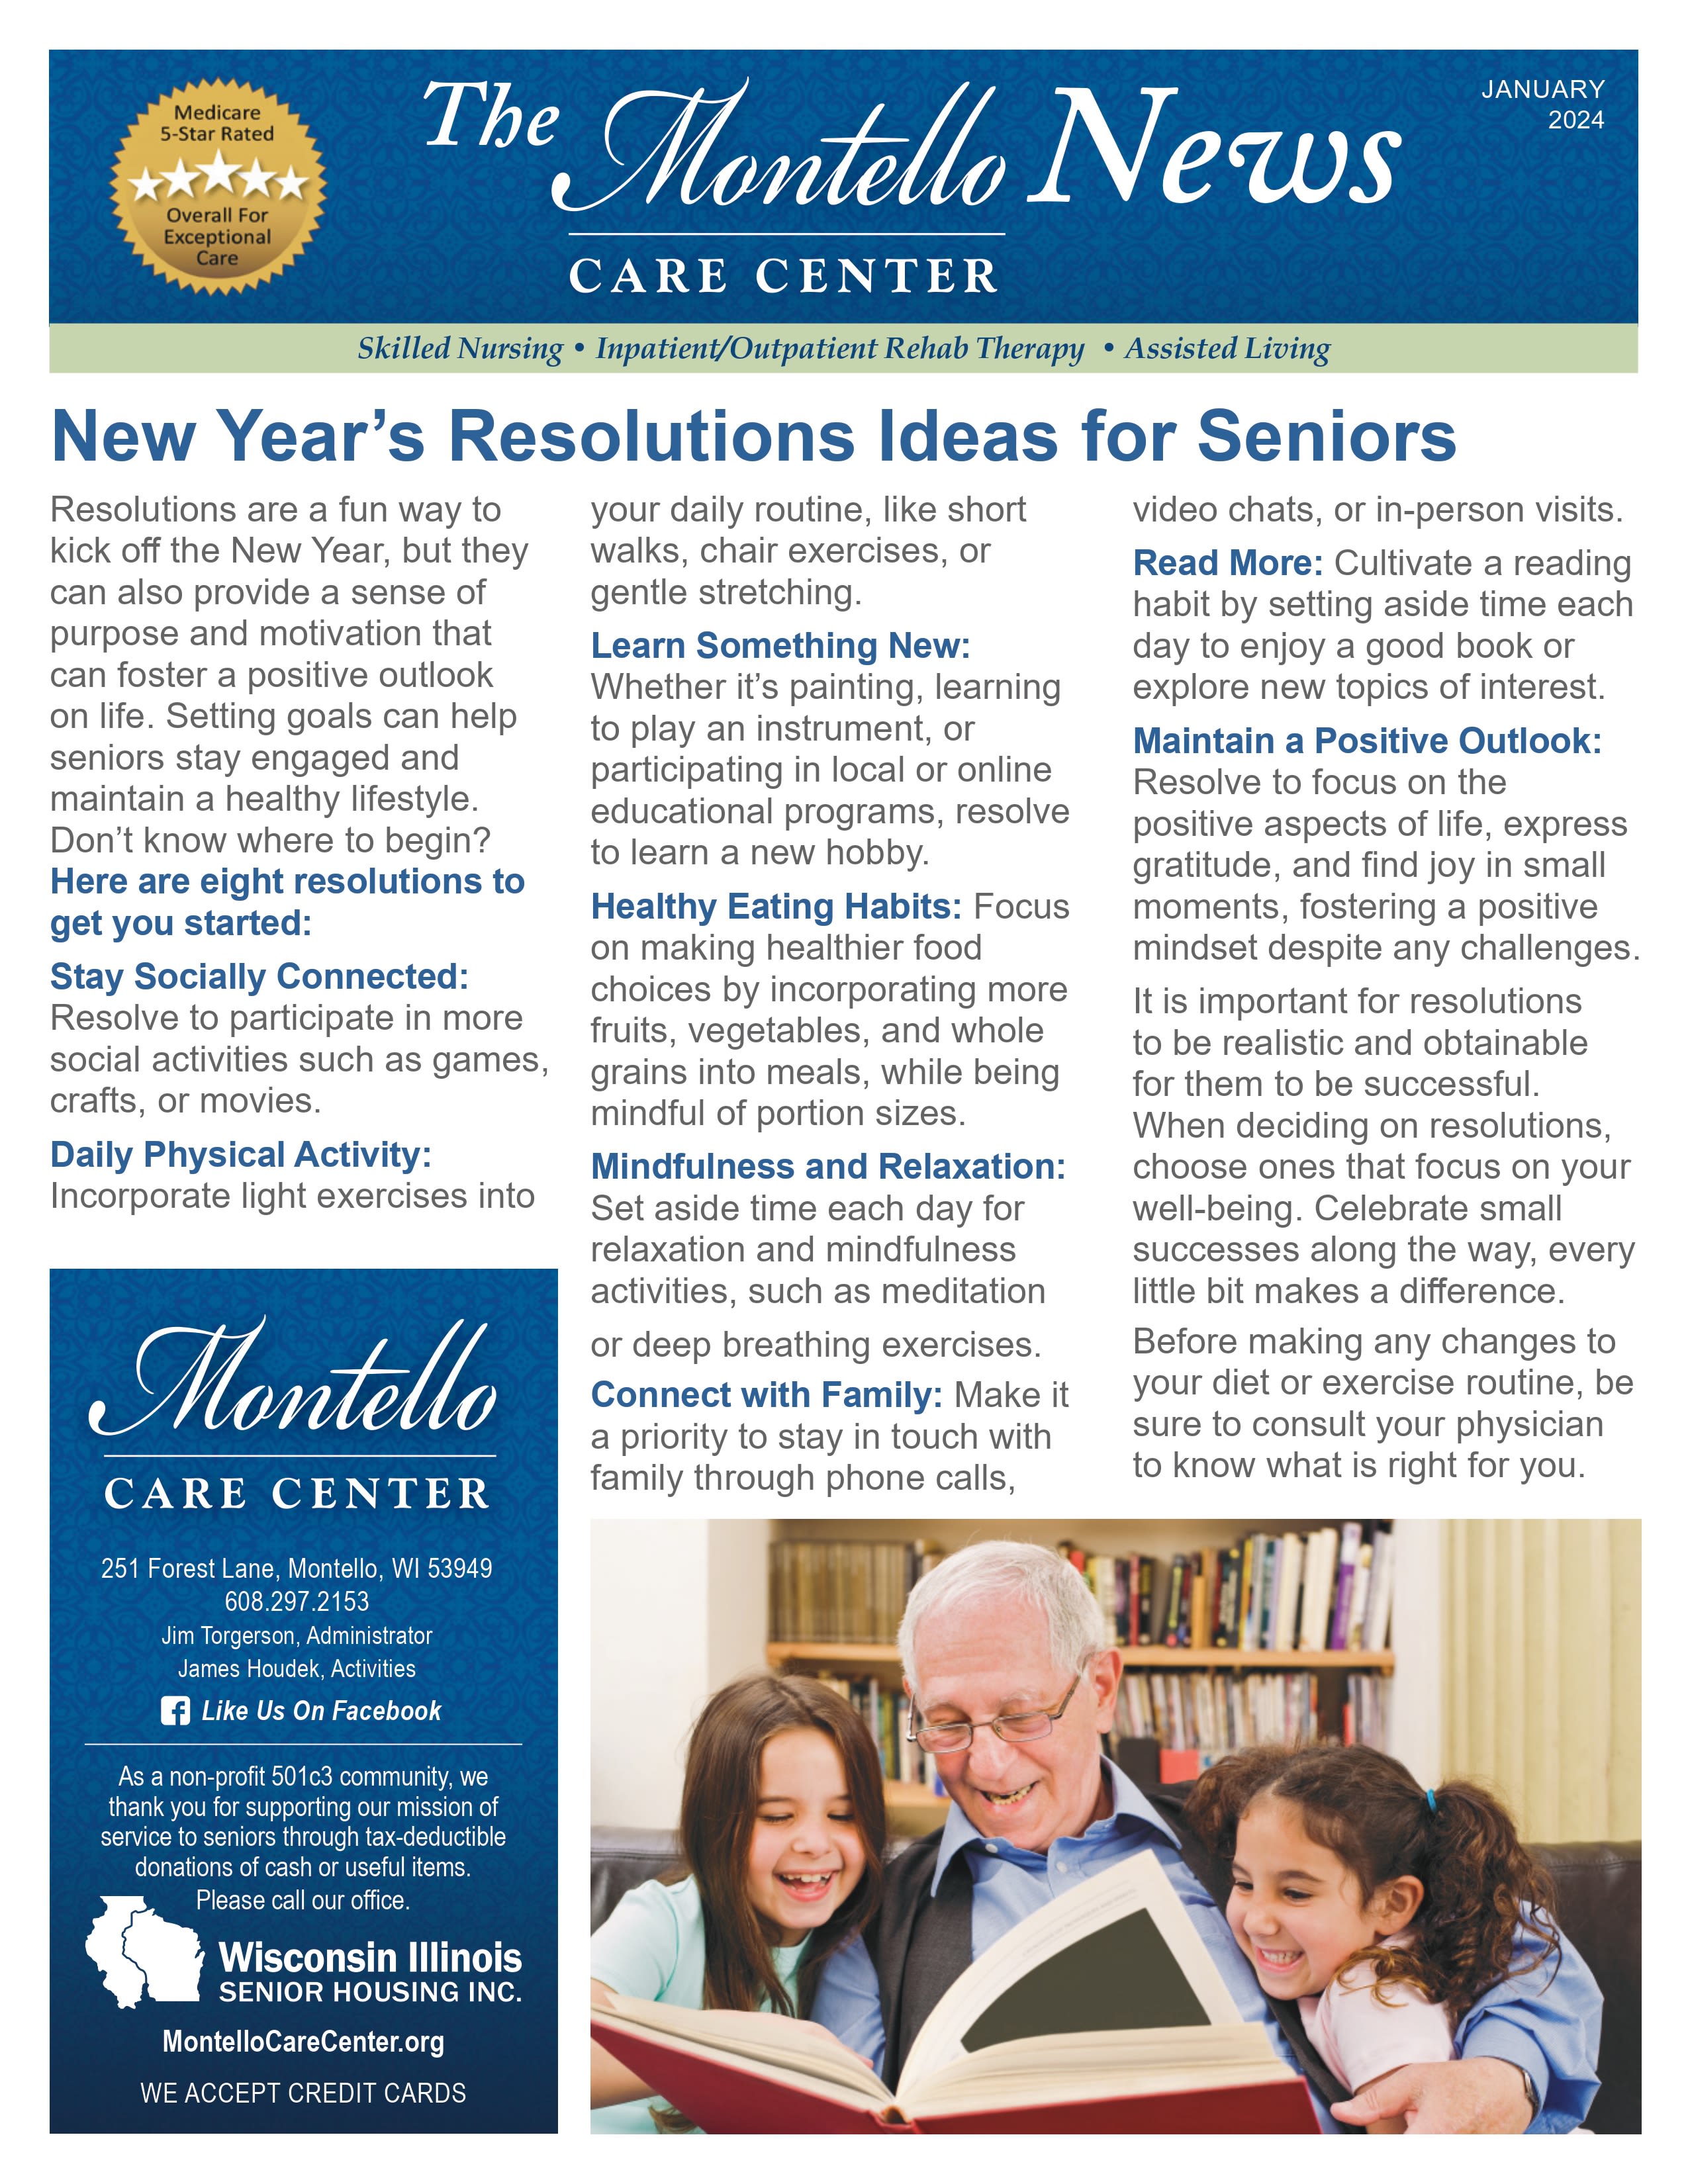 January 2024 Newsletter at Montello Care Center in Montello, Wisconsin